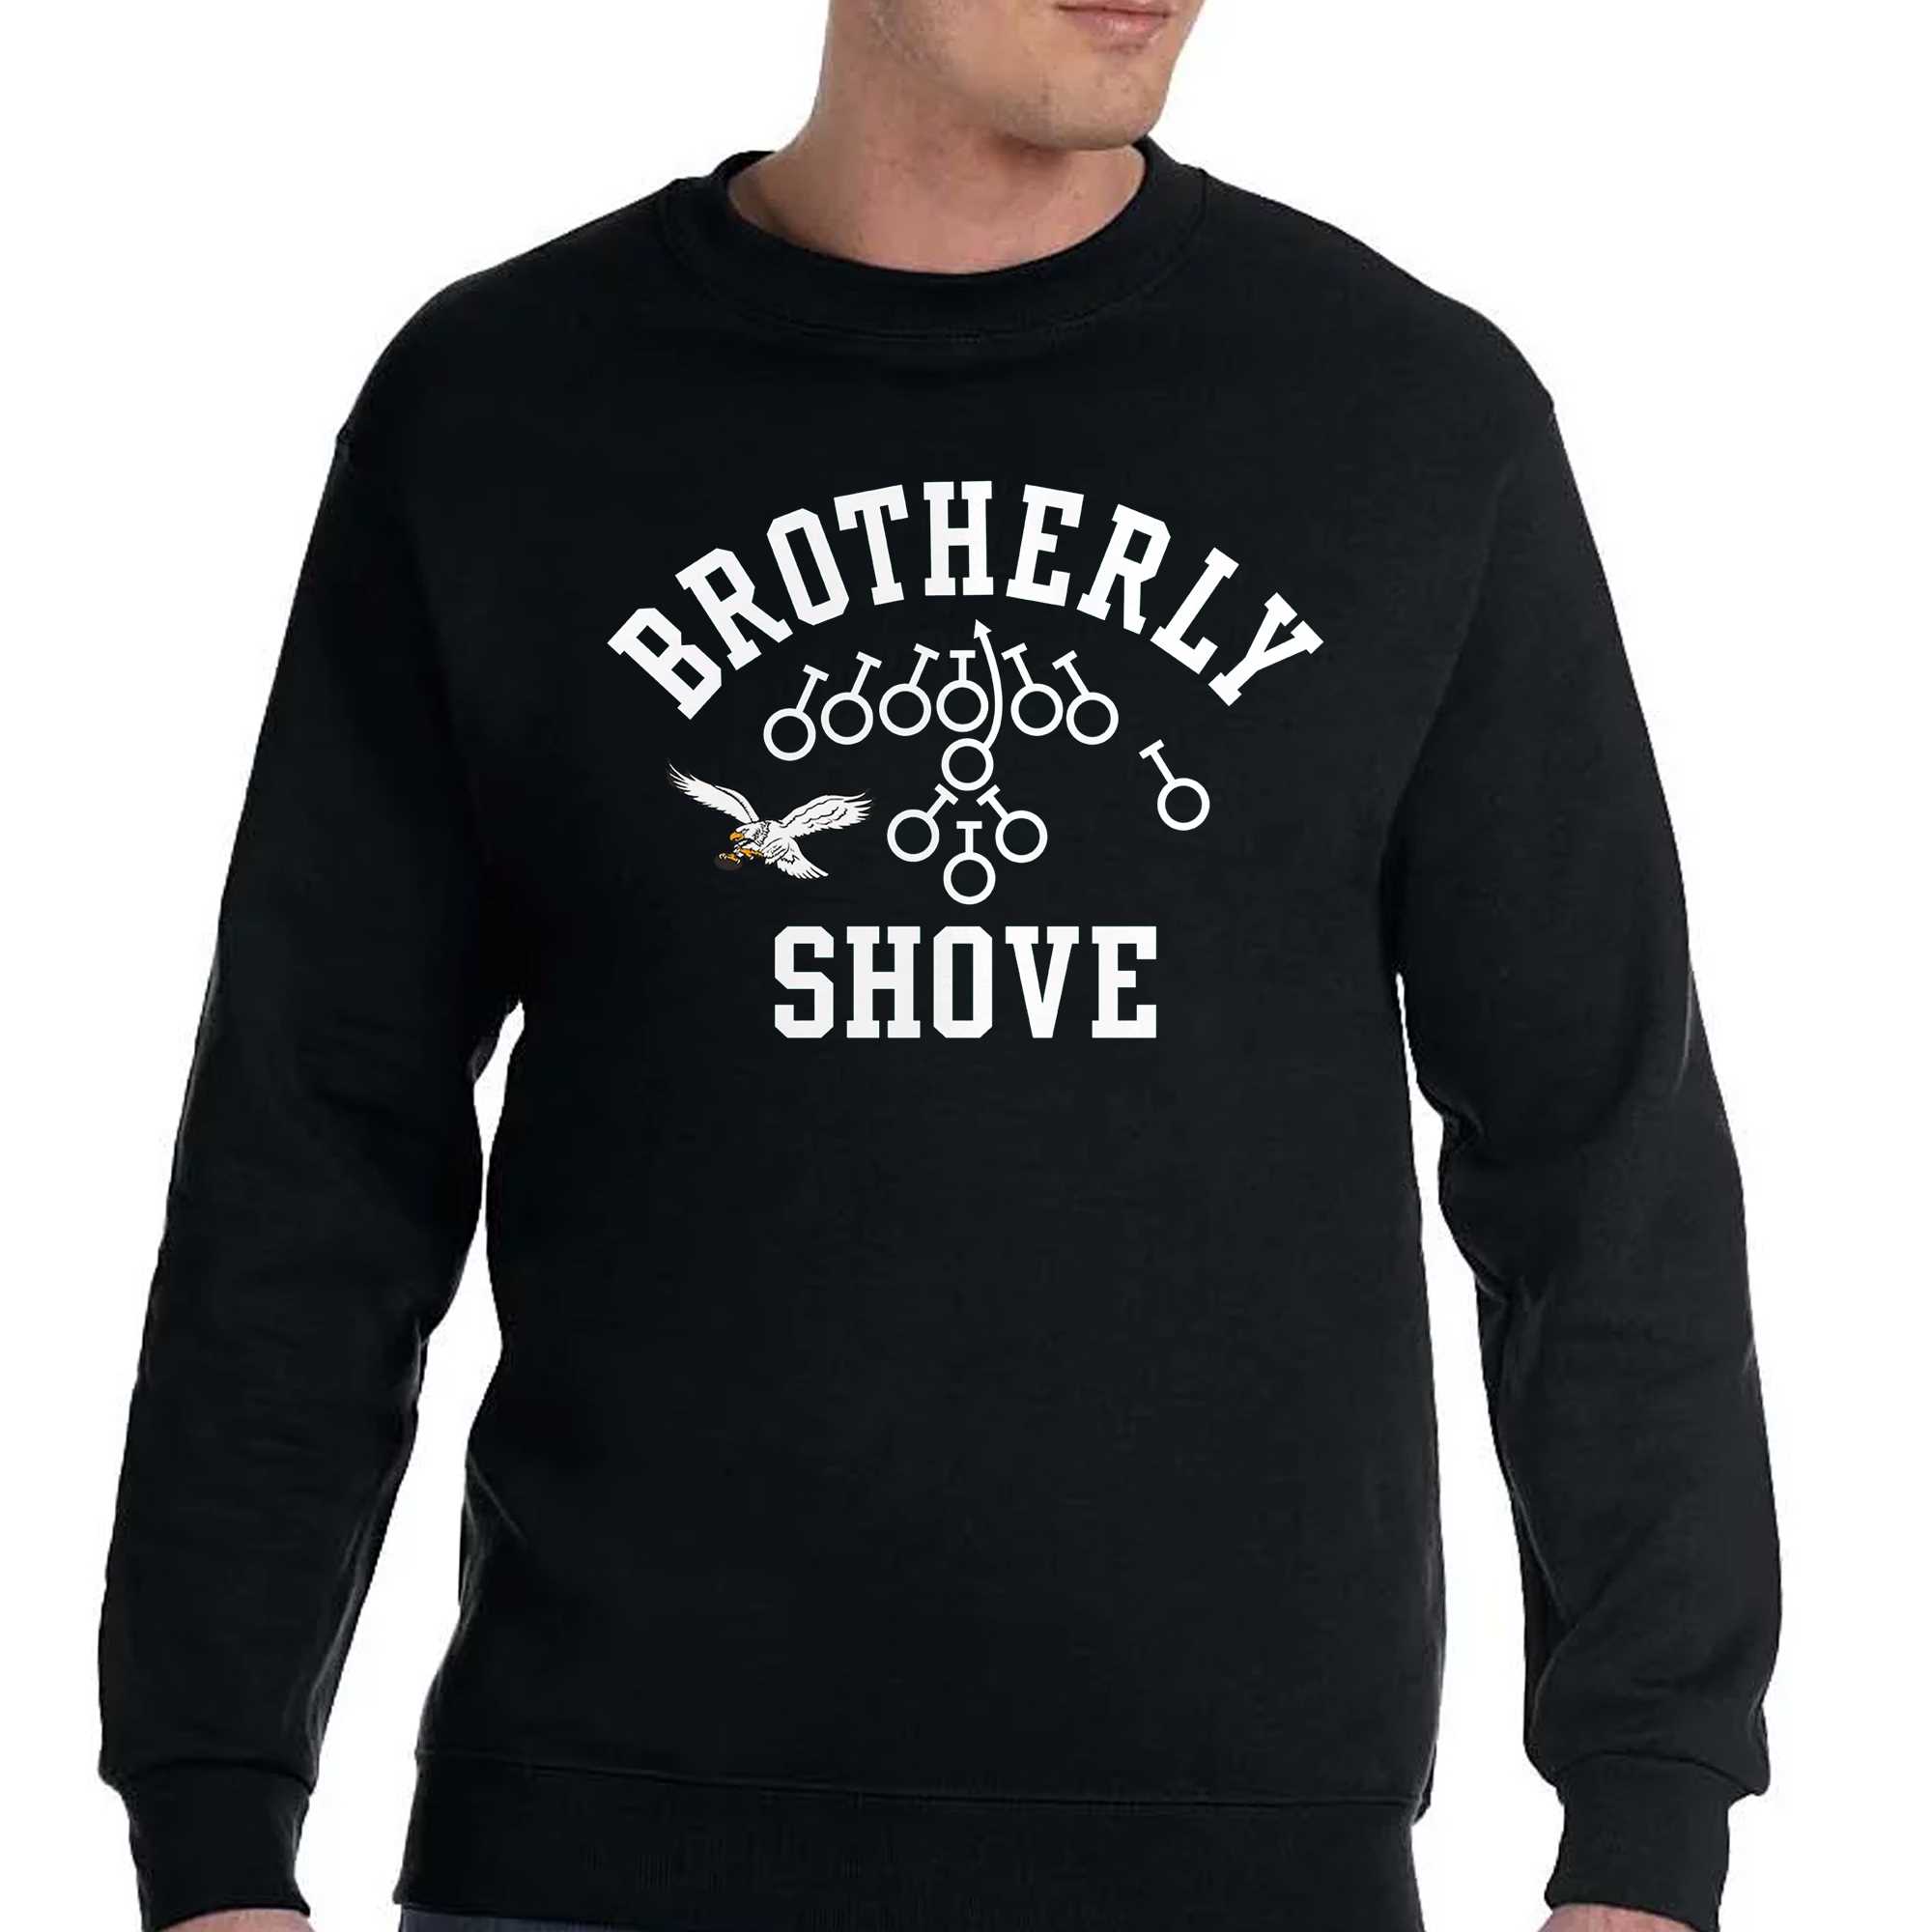 Philadelphia Eagles Brotherly Shove T-shirt 